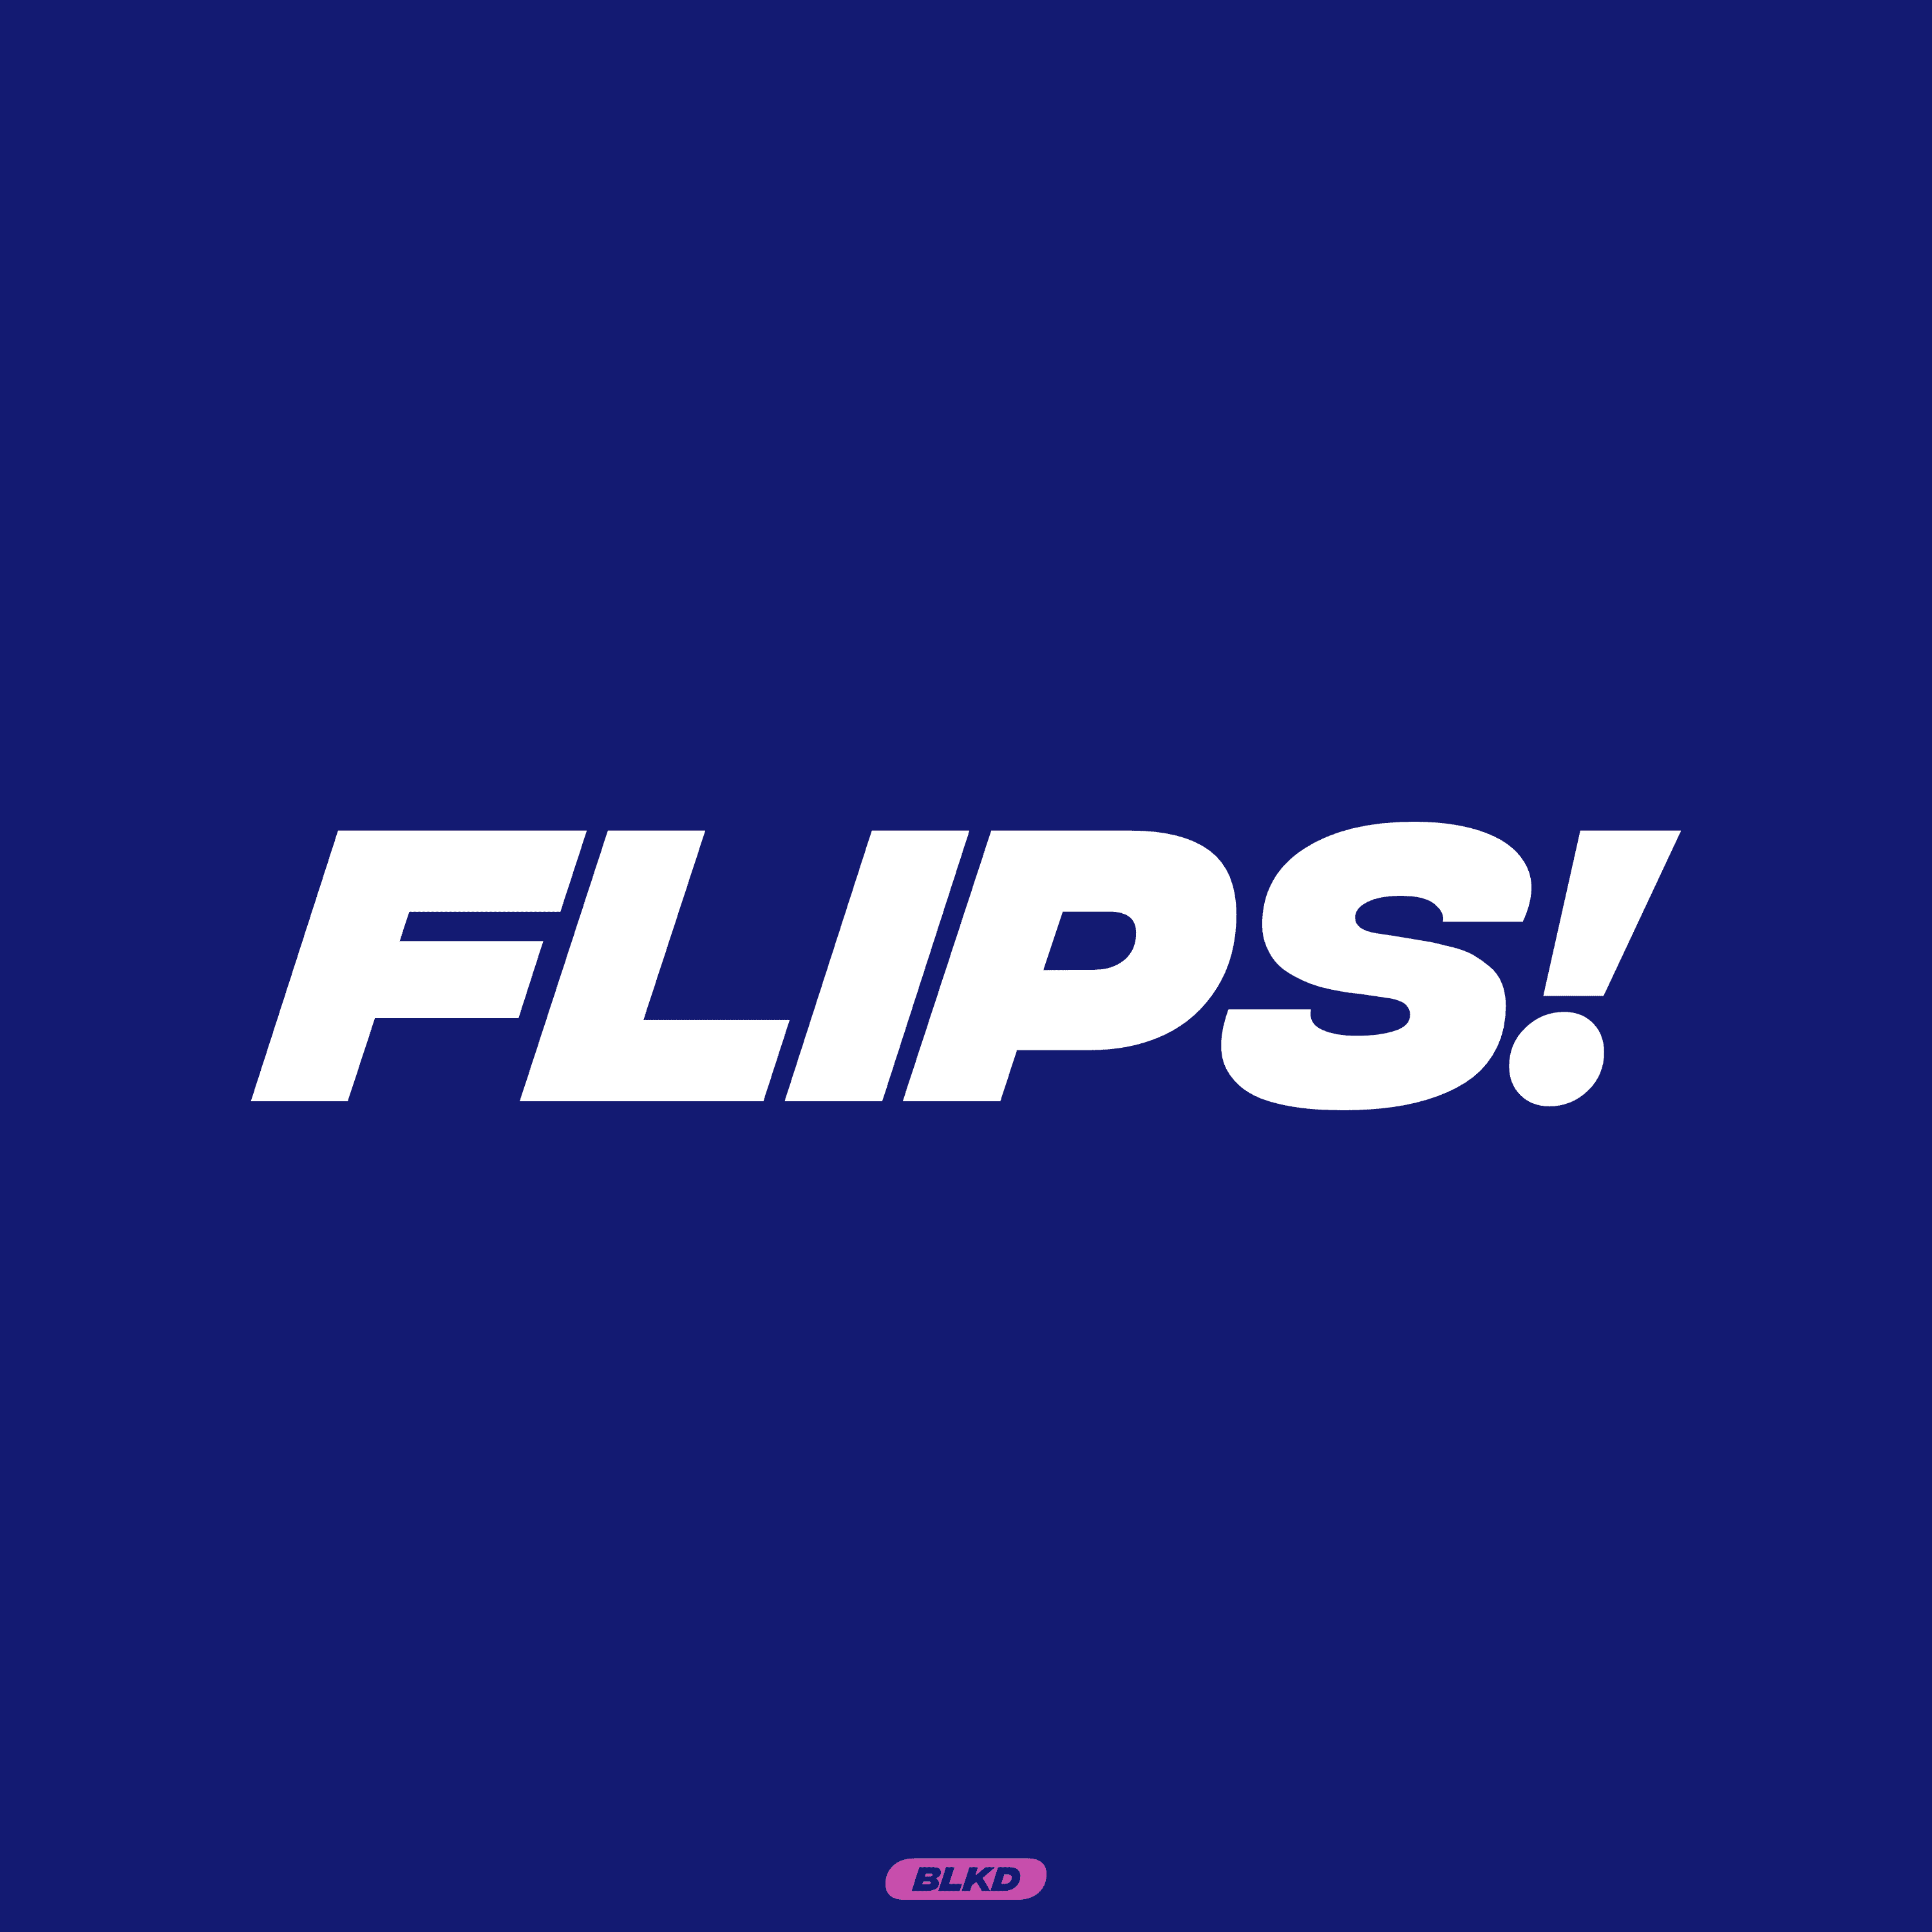 Flips!